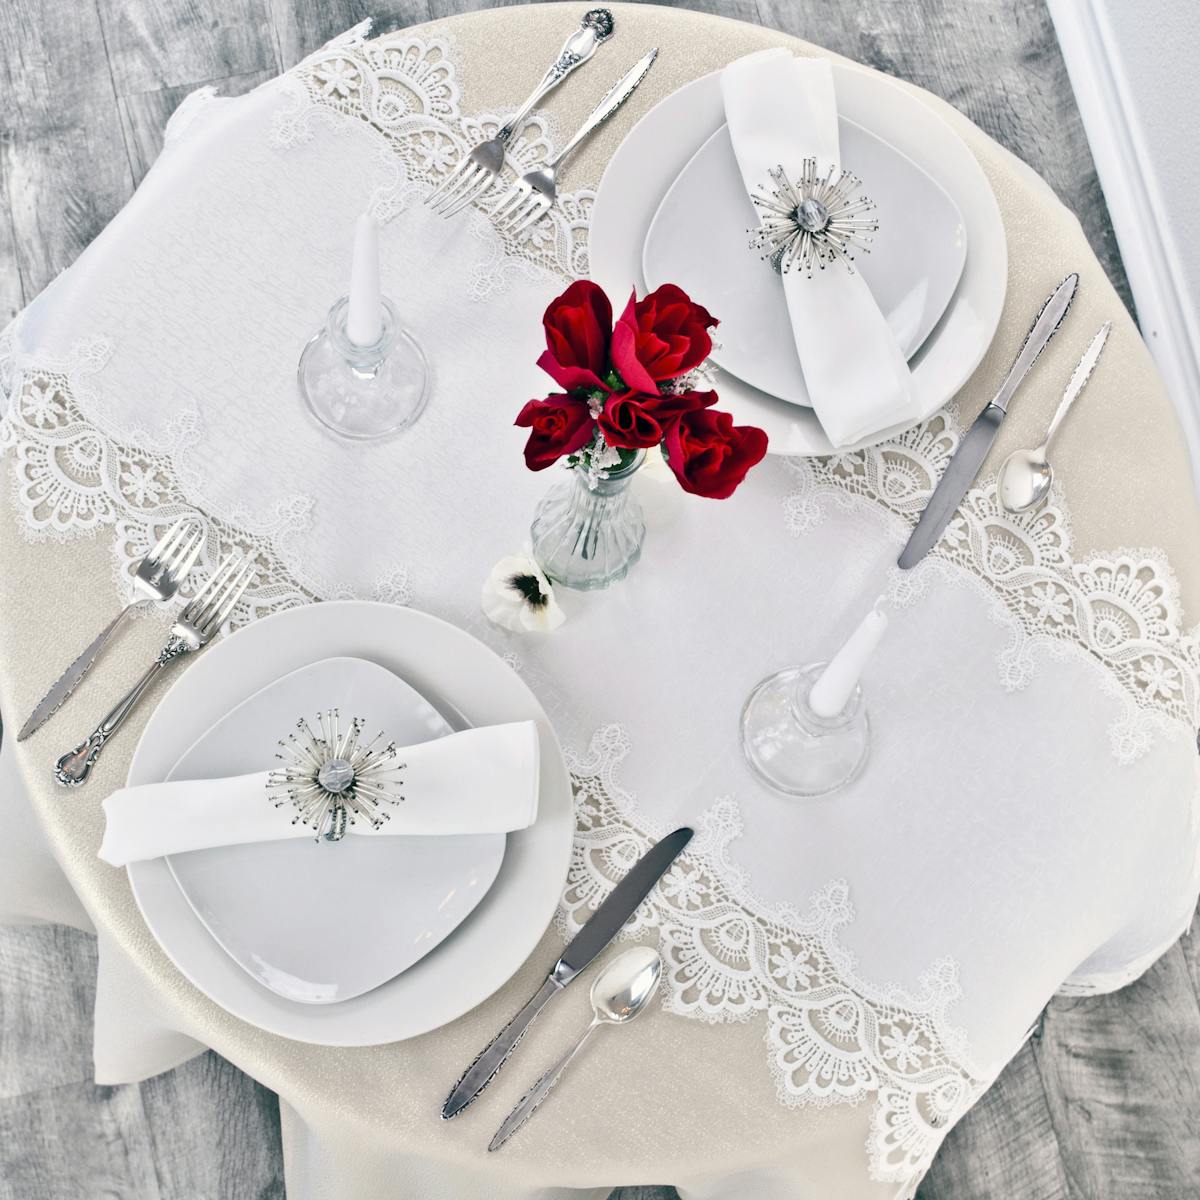 Wedding Table Linens @ TableclothsLAT.com